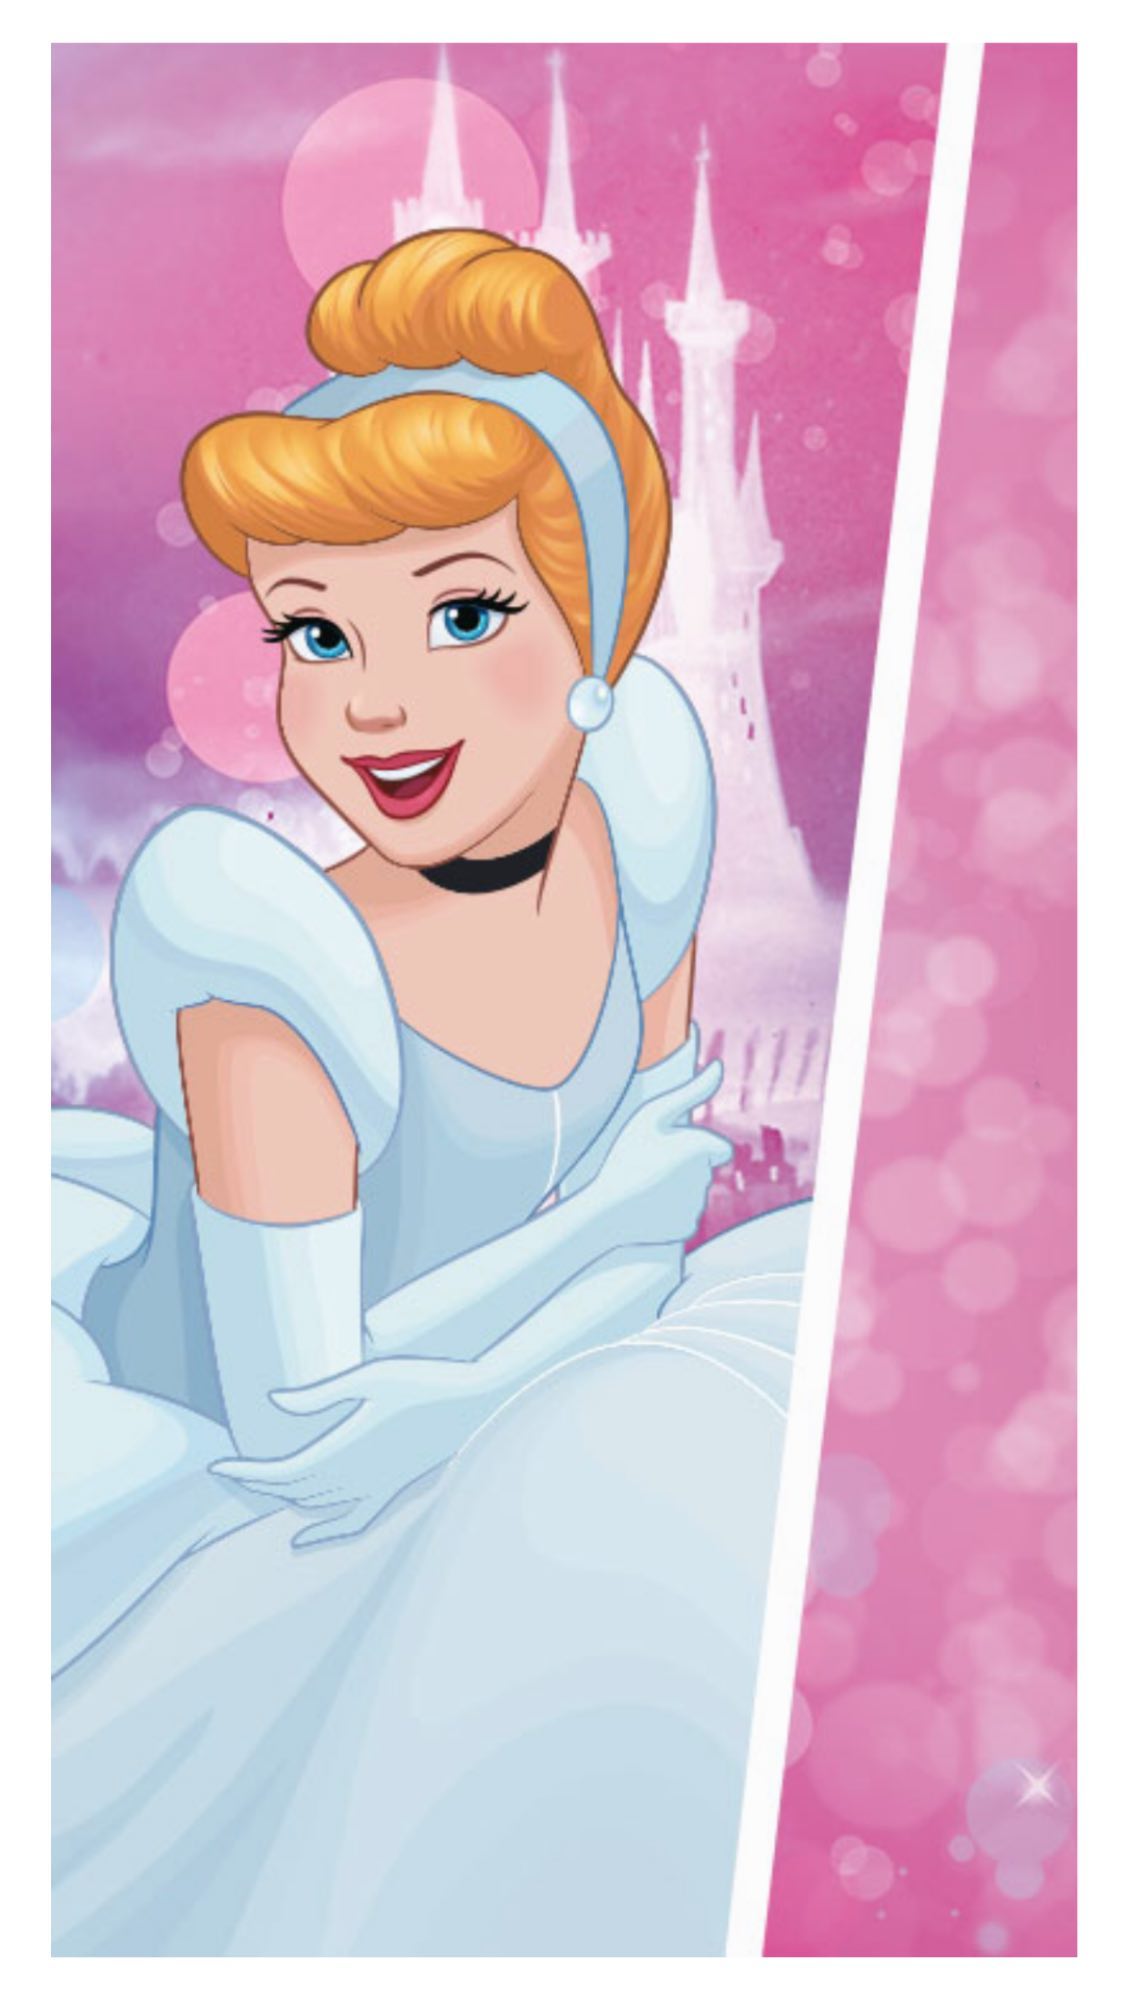 Disney Princess mobile wallpaper collection 